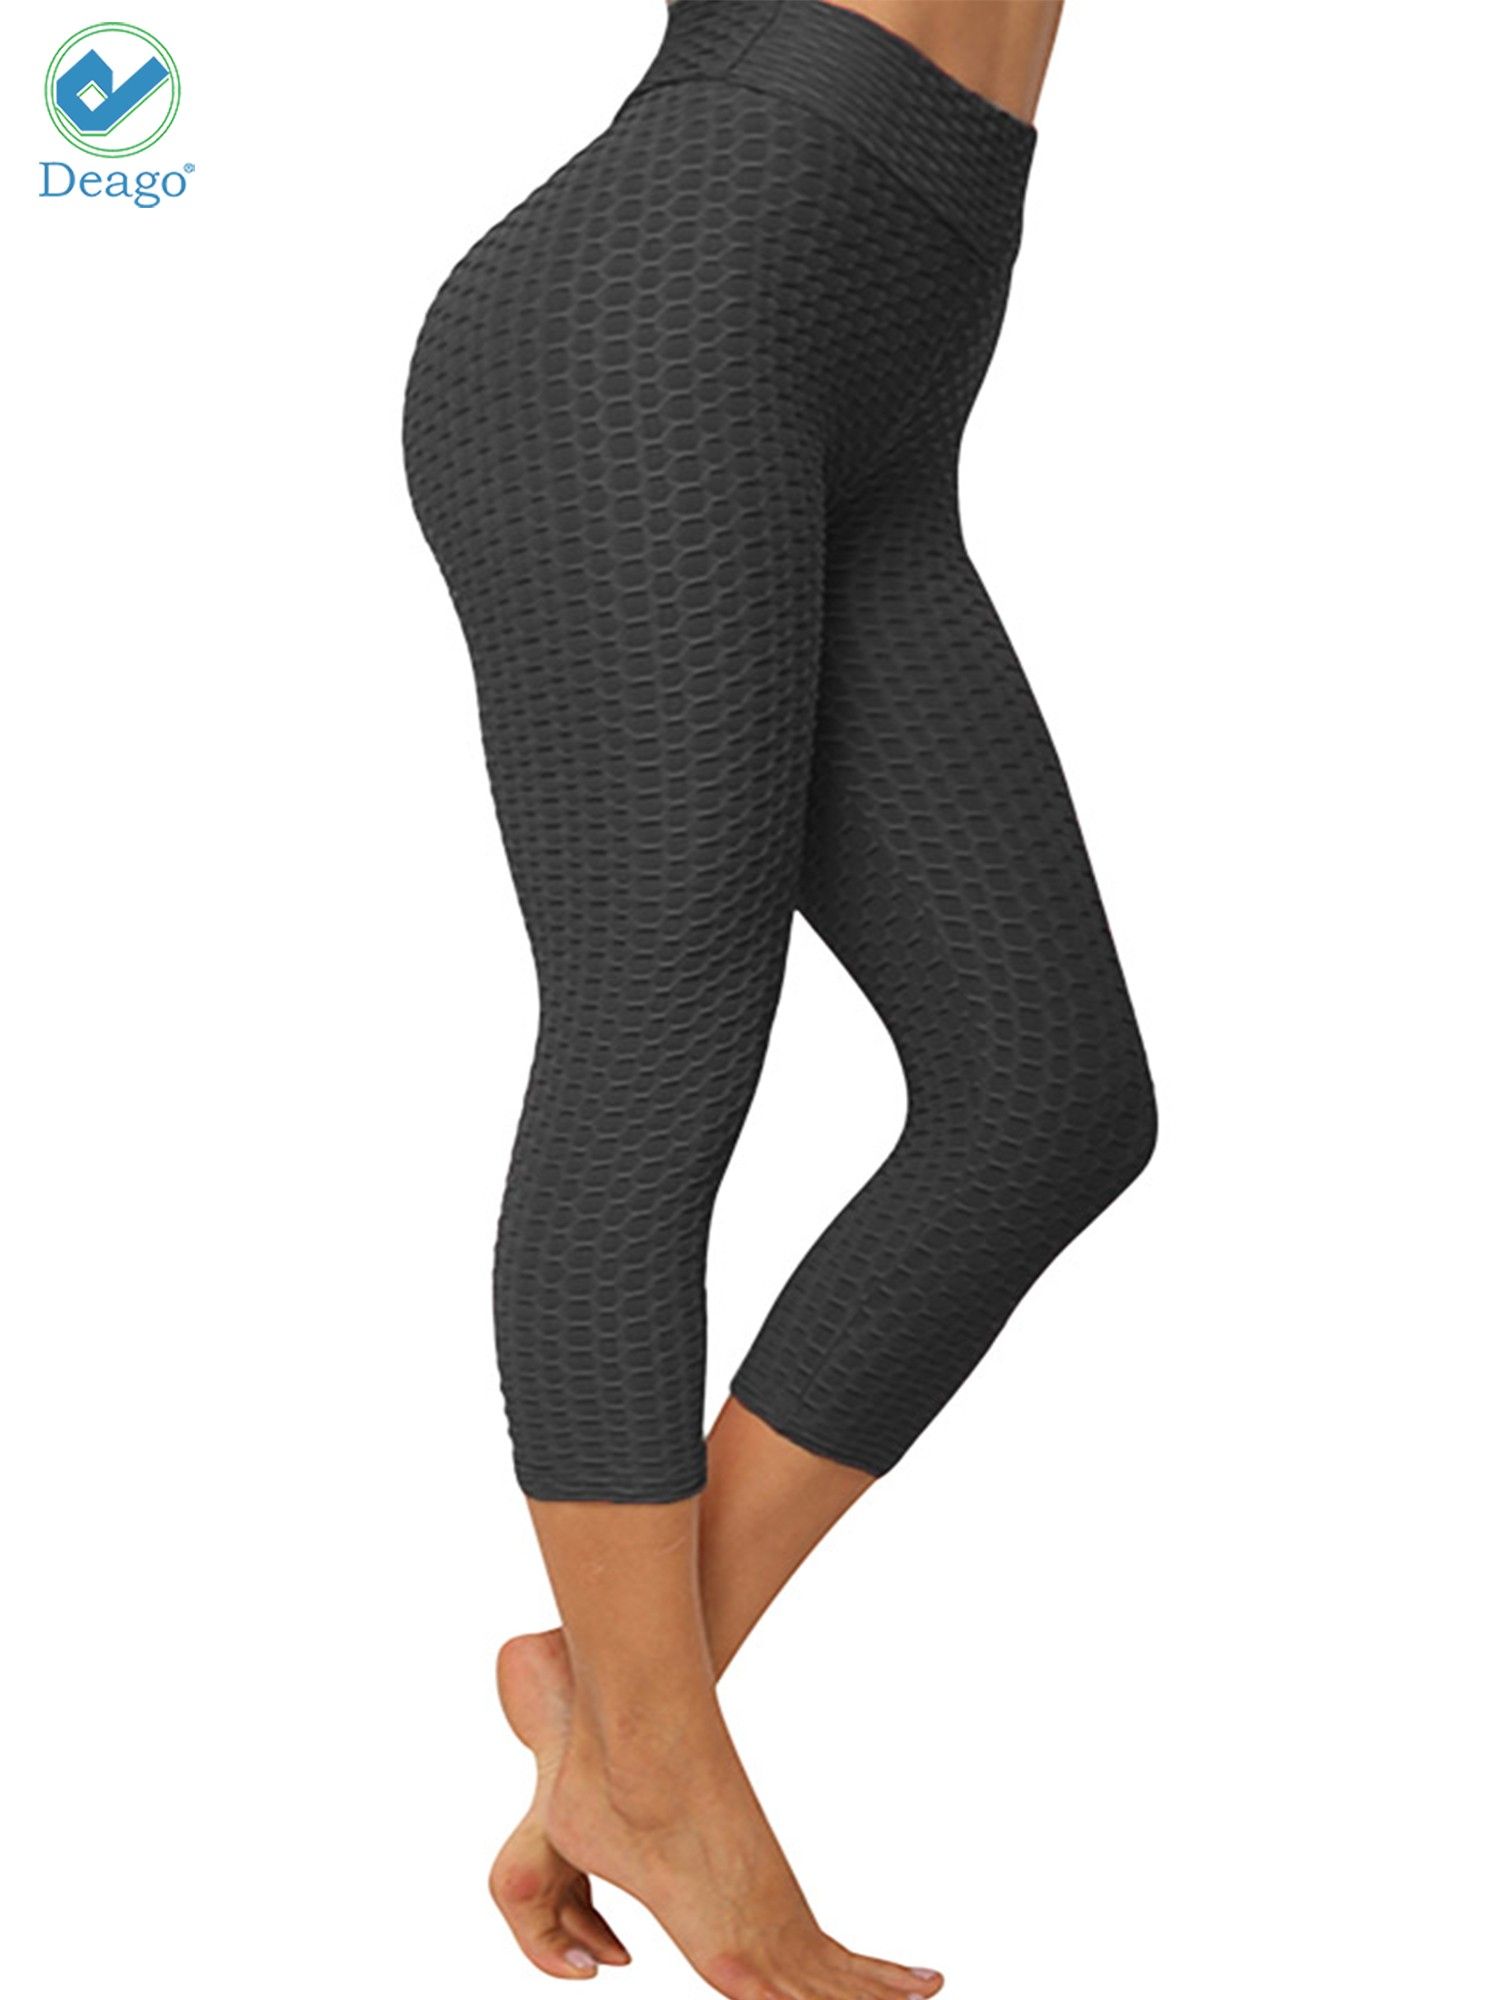 Deago Women's High Waist Yoga Pants Capri Lift up Butt Tummy Control Workout Running Slimming Stretch Sports Leggings (Black,L) - image 3 of 9